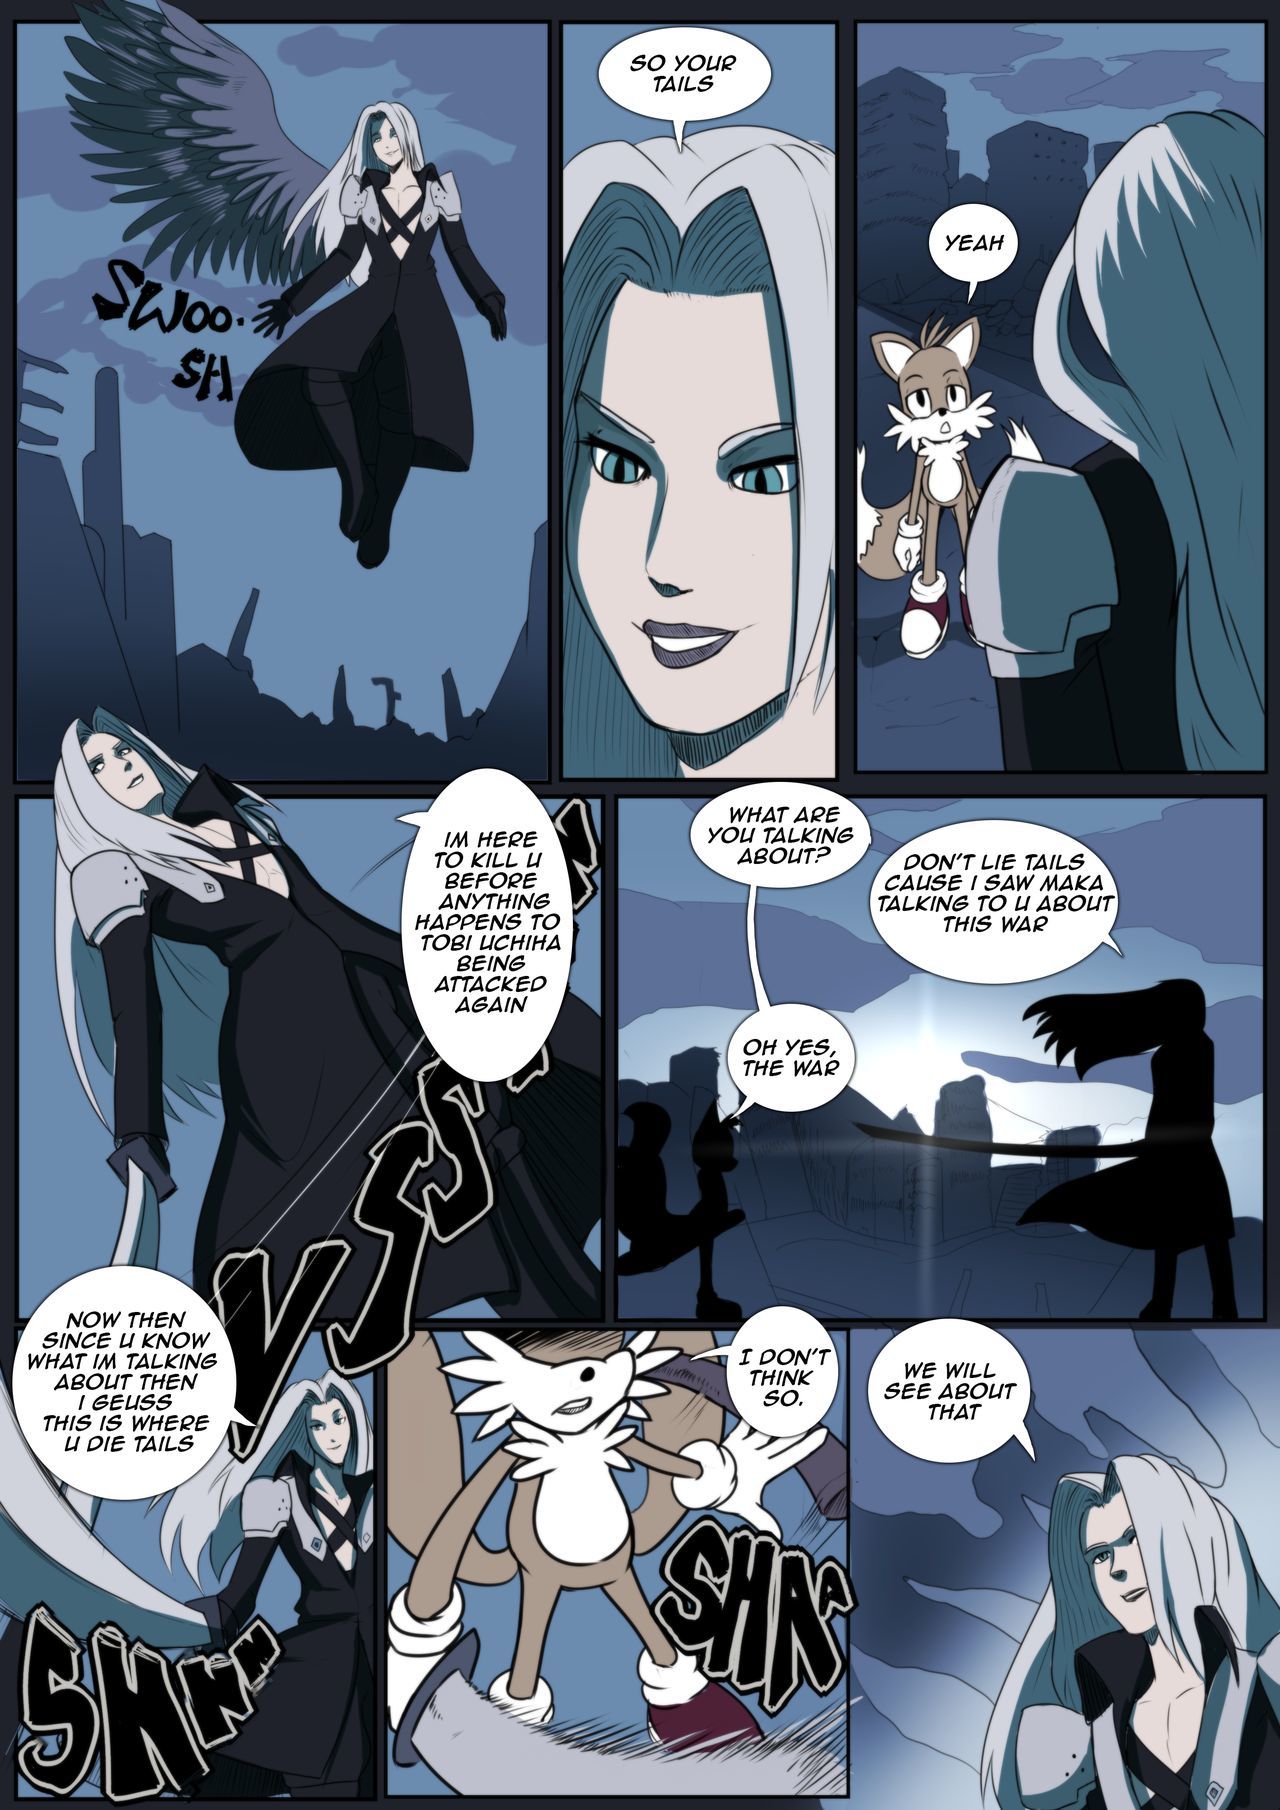 Tails vs Sephiroth - Lemonfont page 1